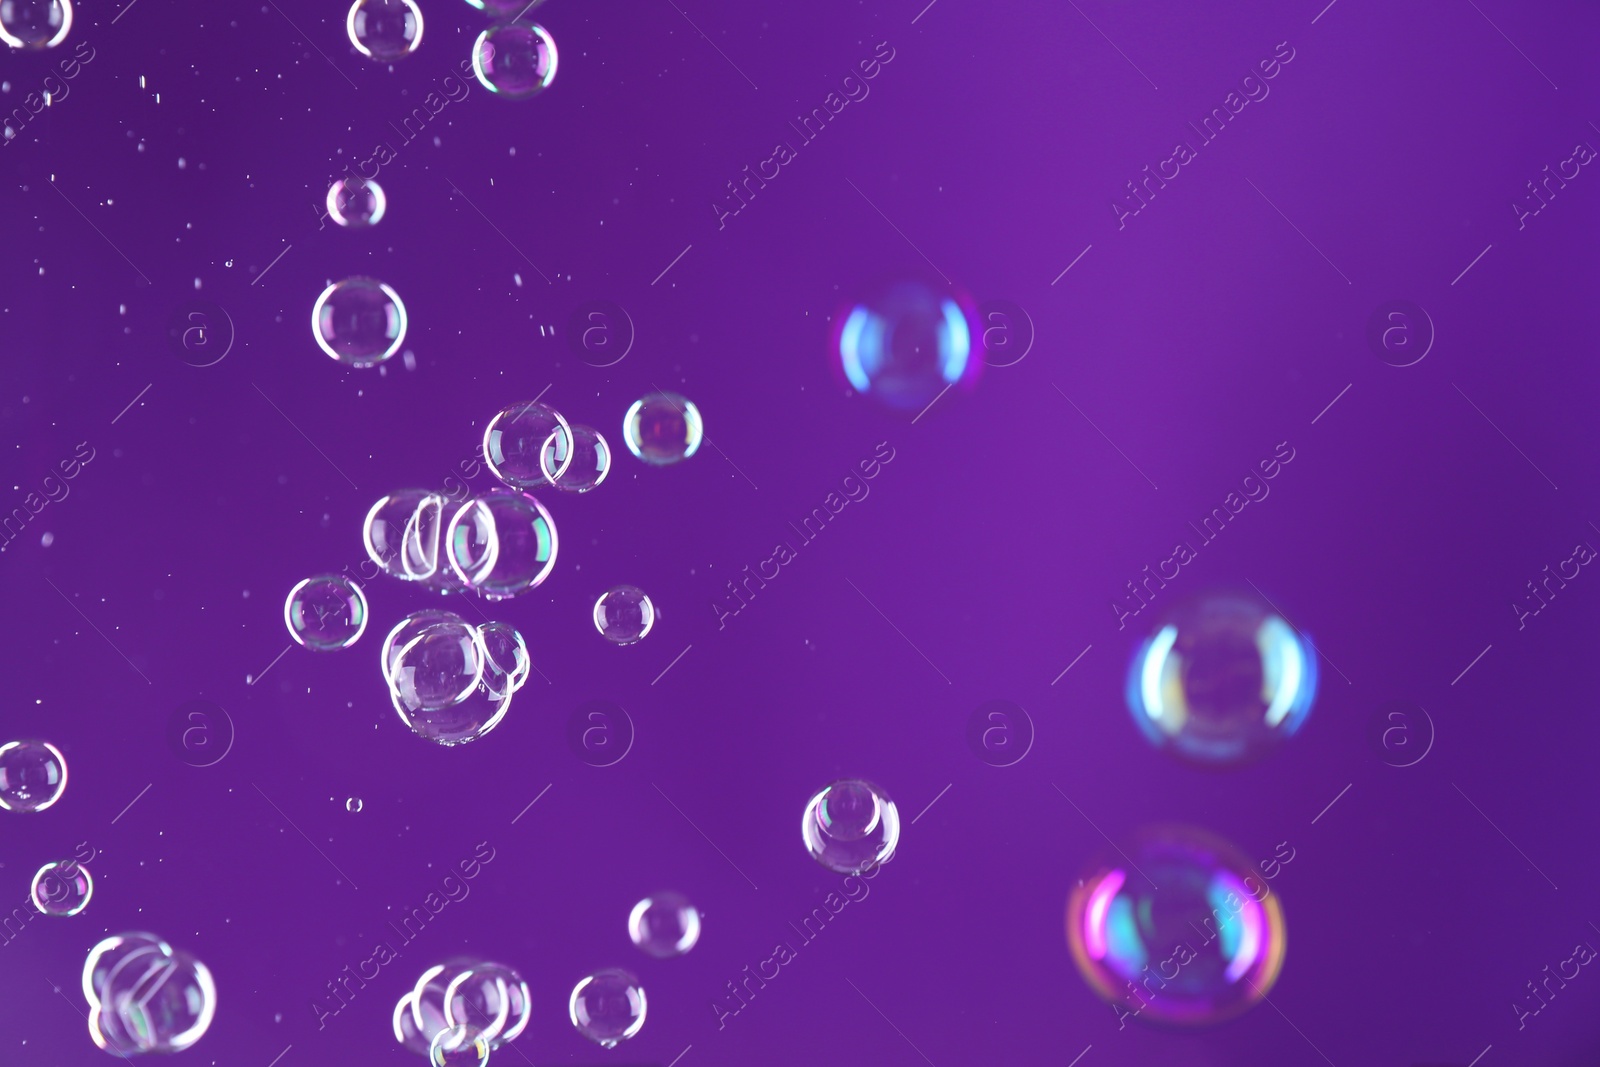 Photo of Beautiful transparent soap bubbles on purple background